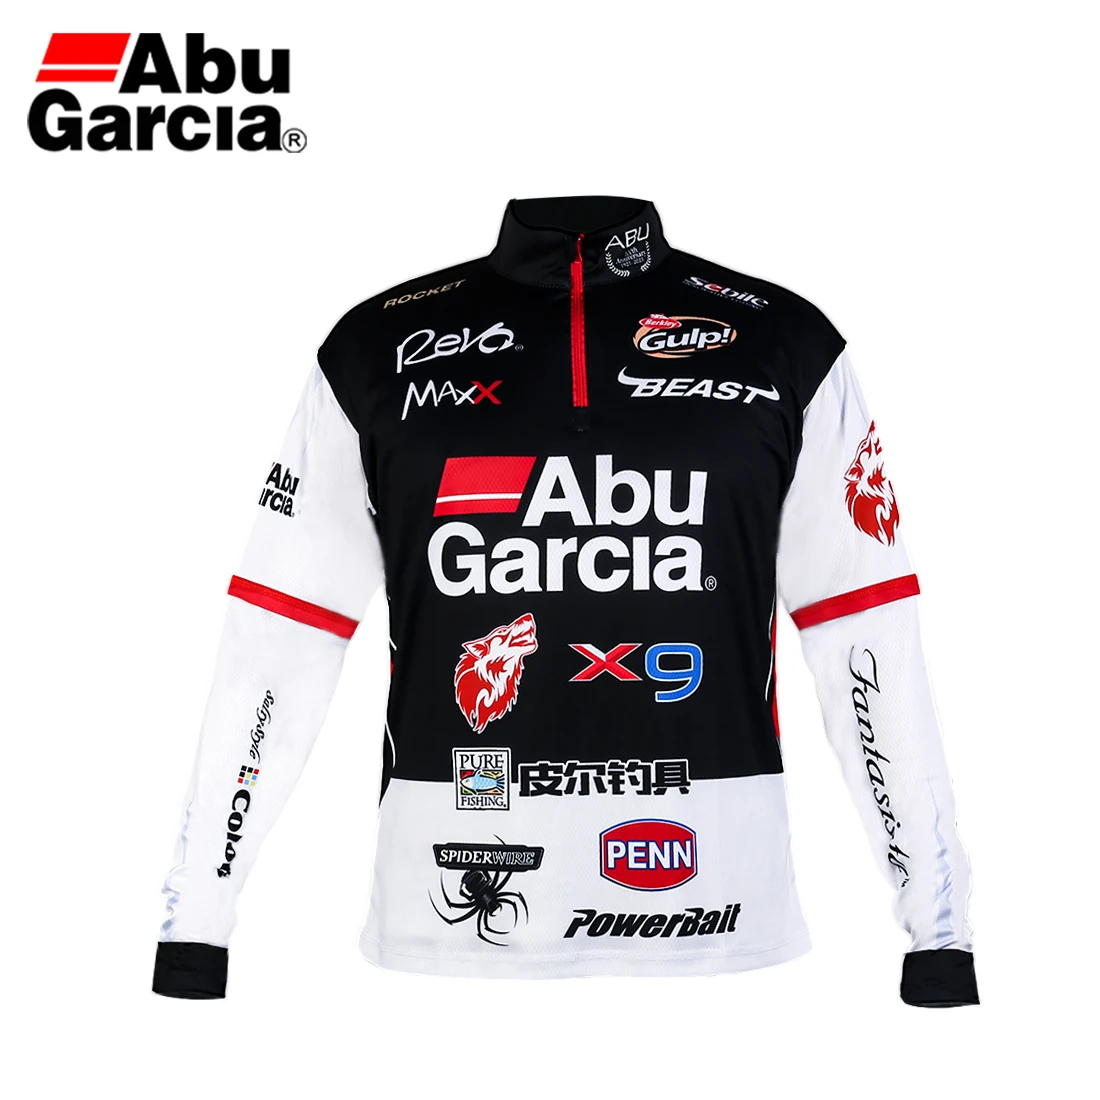 Abu Garcia Pro Tournament Fishing Jersey Shirt Medium Size Free USA Shippng 